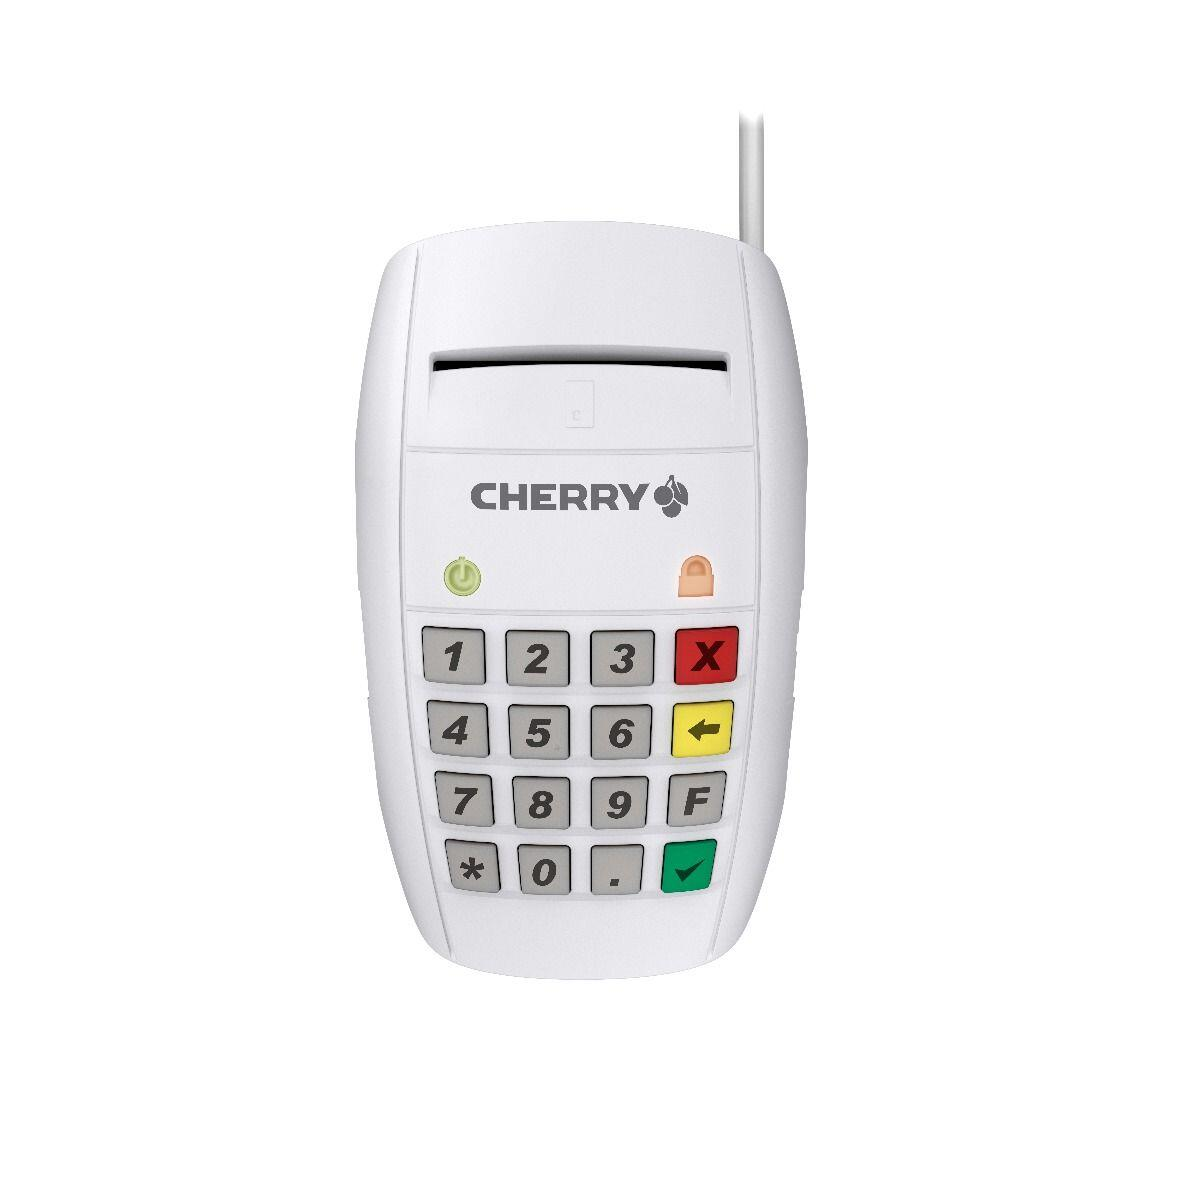 CHERRY Smart Terminal ST-2100 Kartenlesegerät, weiß Standard gainsboro